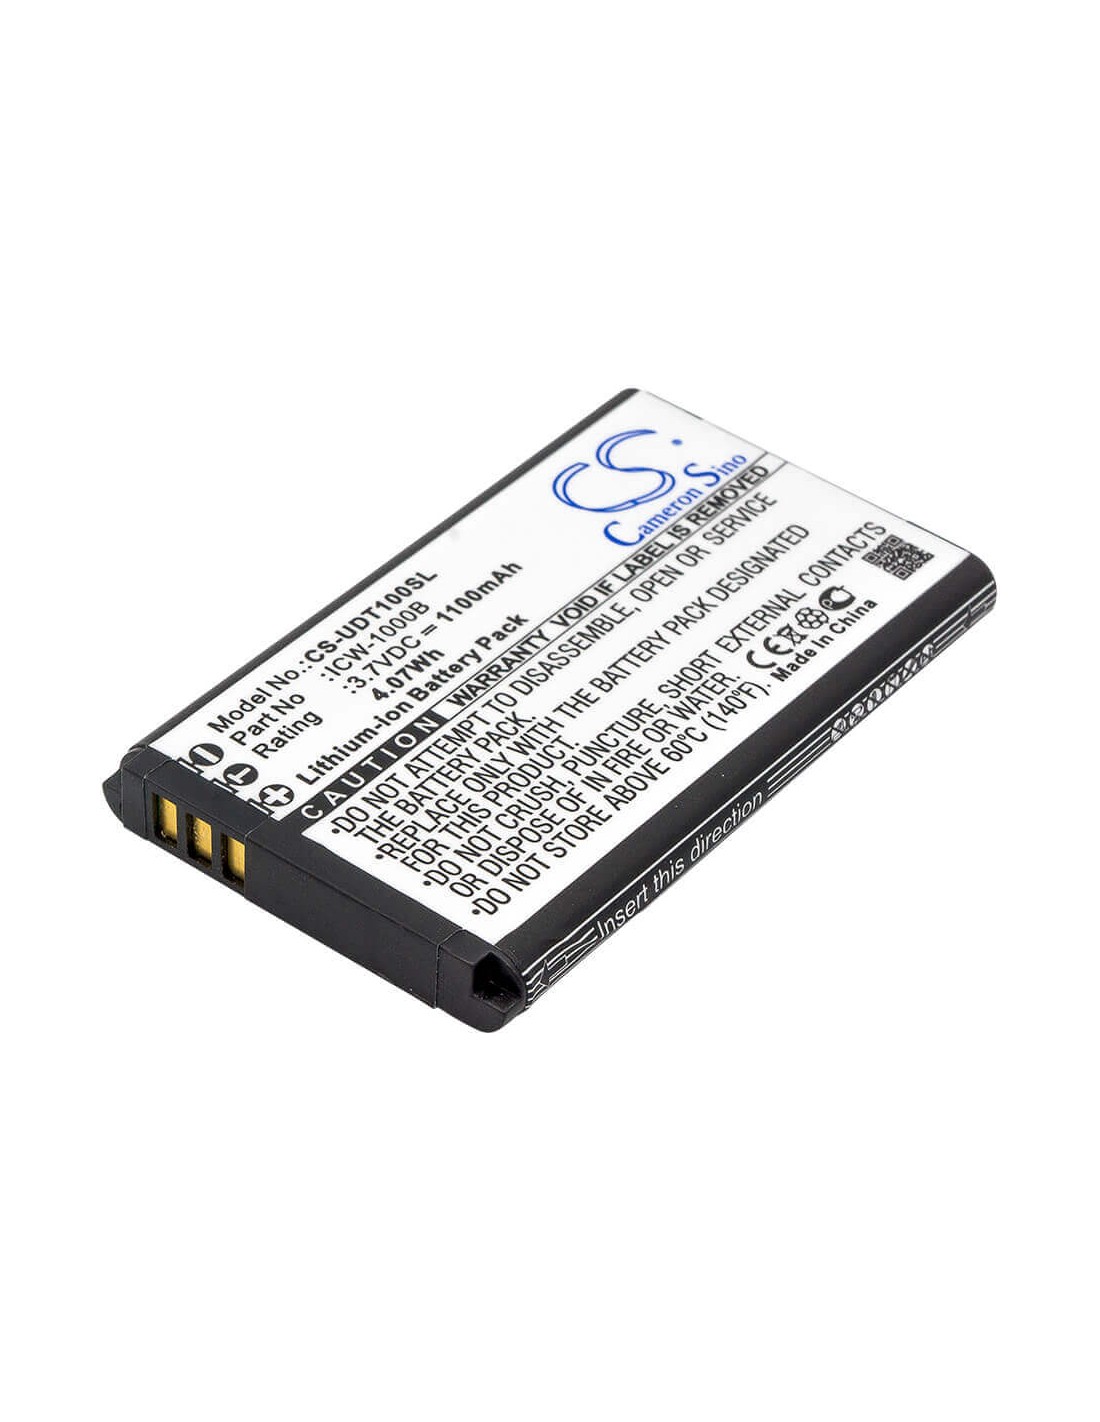 Battery for Unidata, Icw-1000g, Wpu-7700, Wpu-7800 3.7V, 1100mAh - 4.07Wh